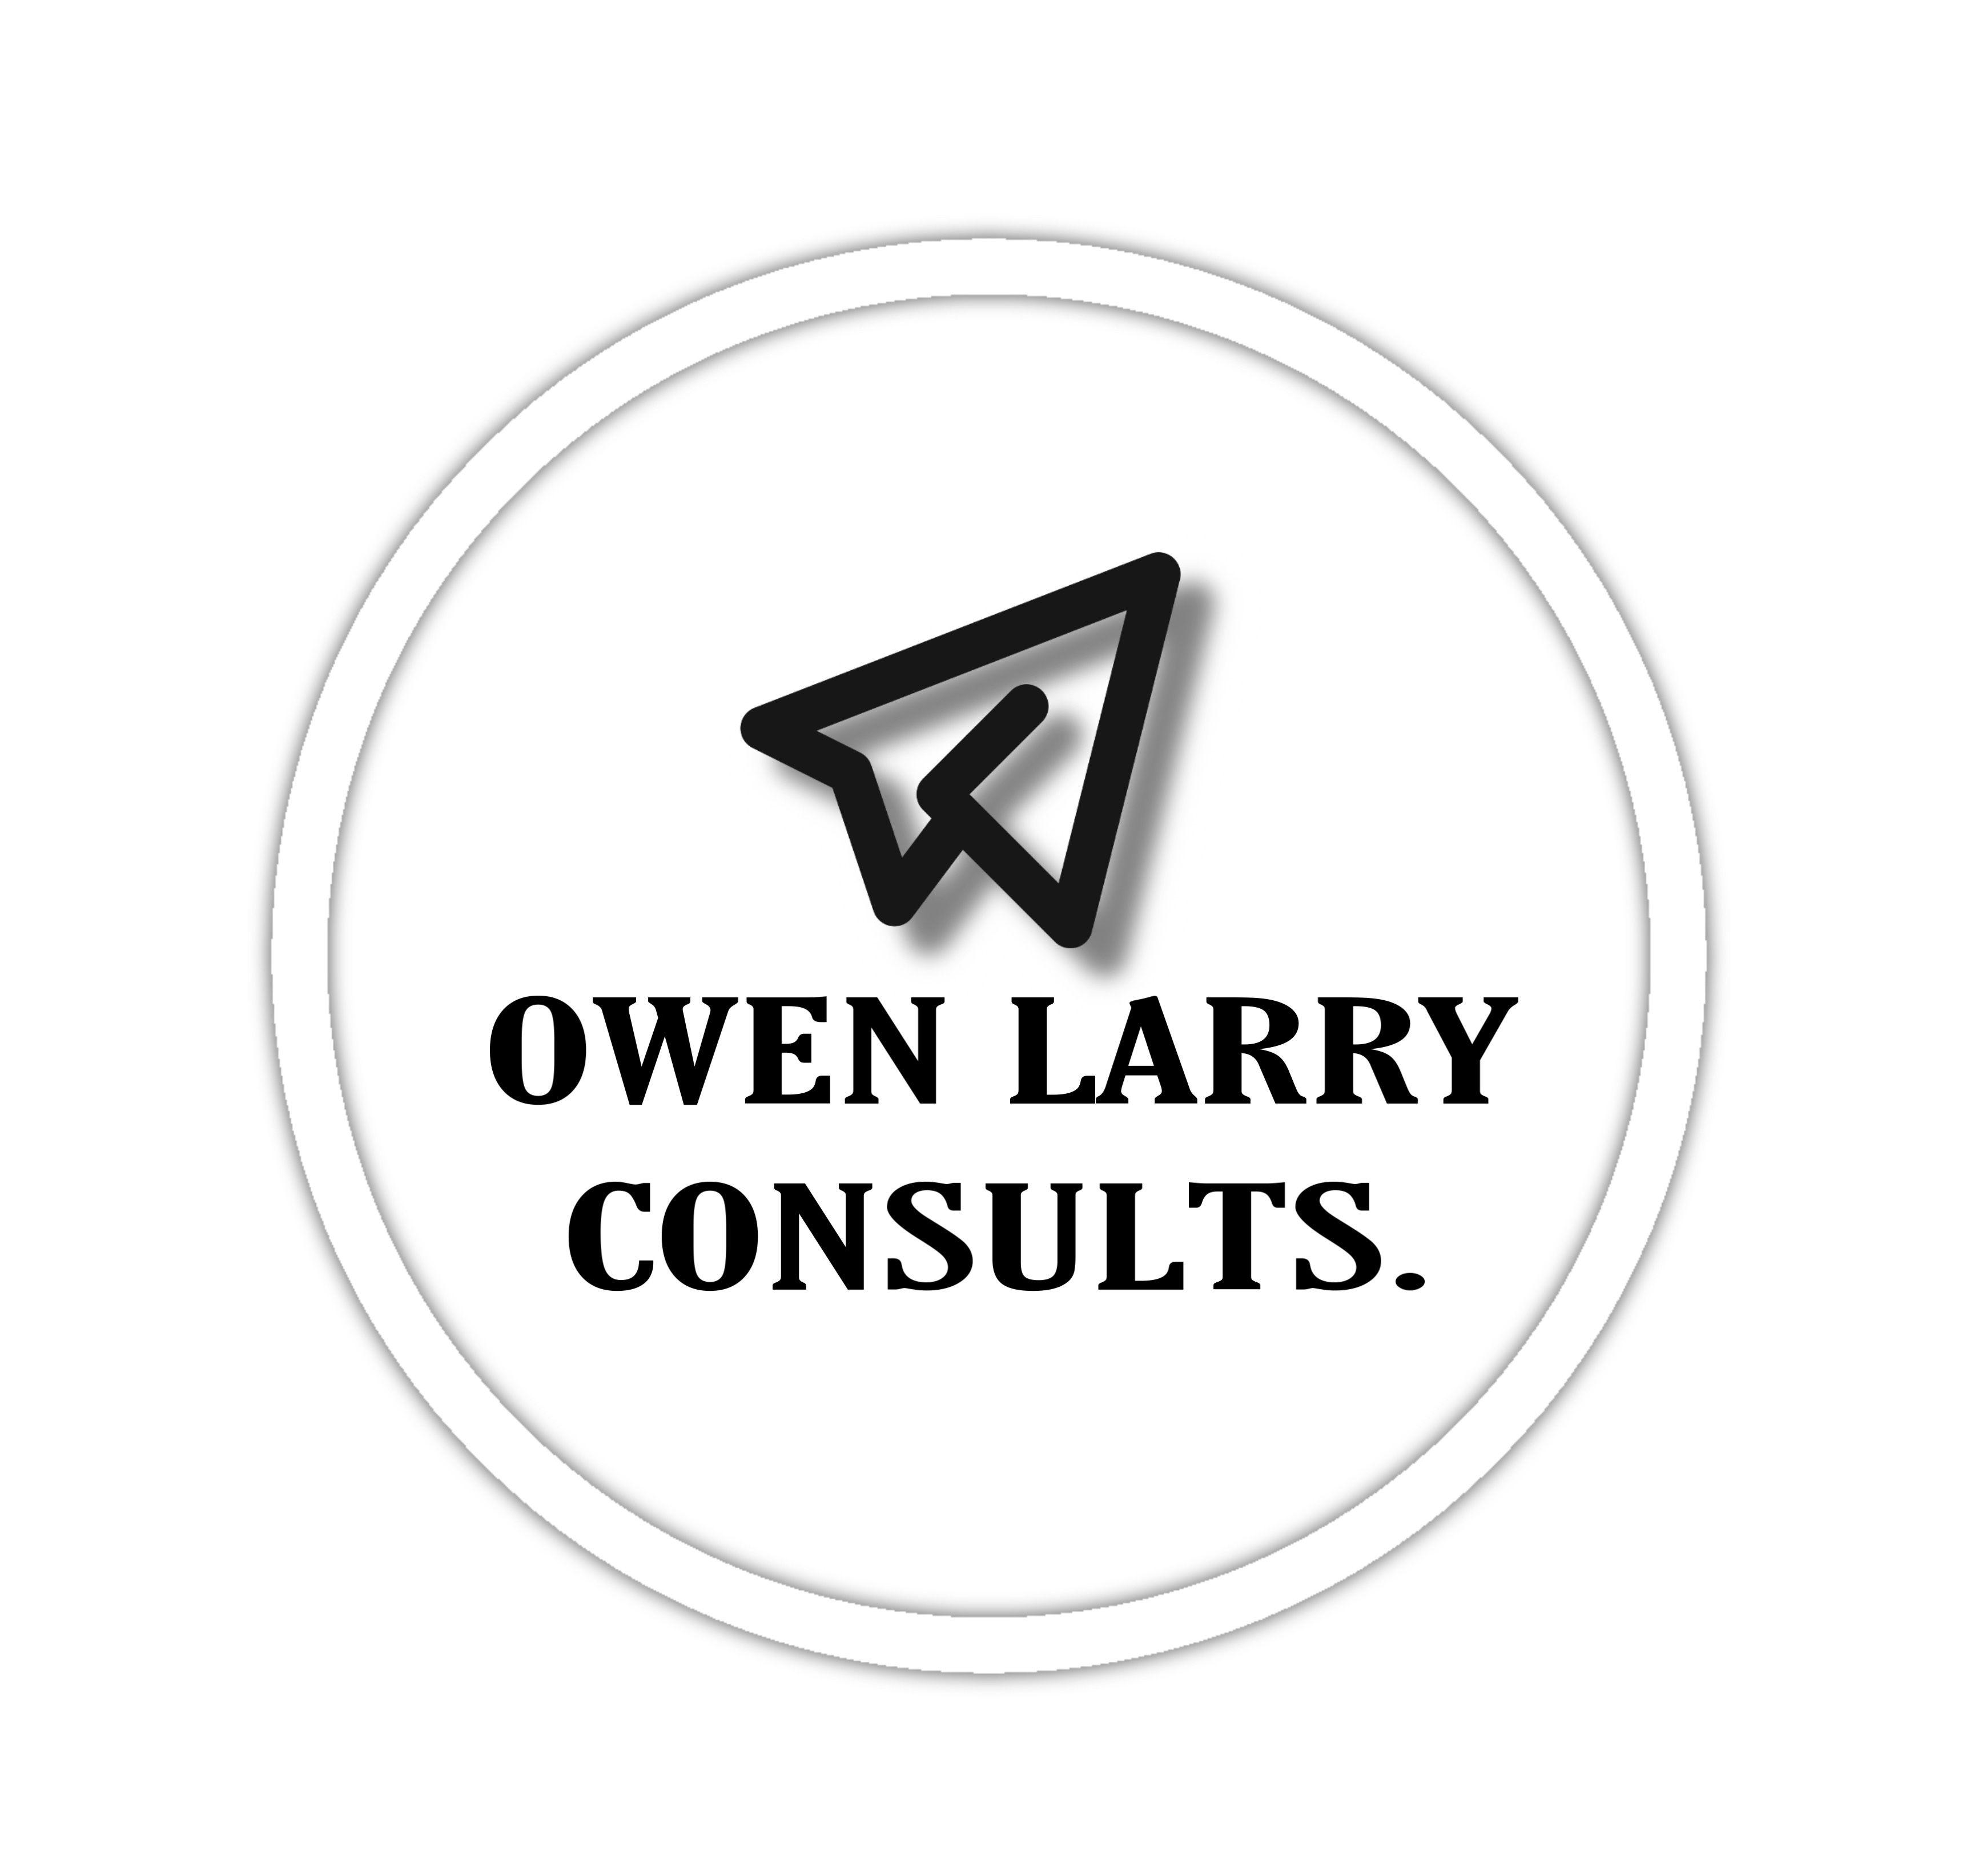 OWEN LARRY CONSULTS